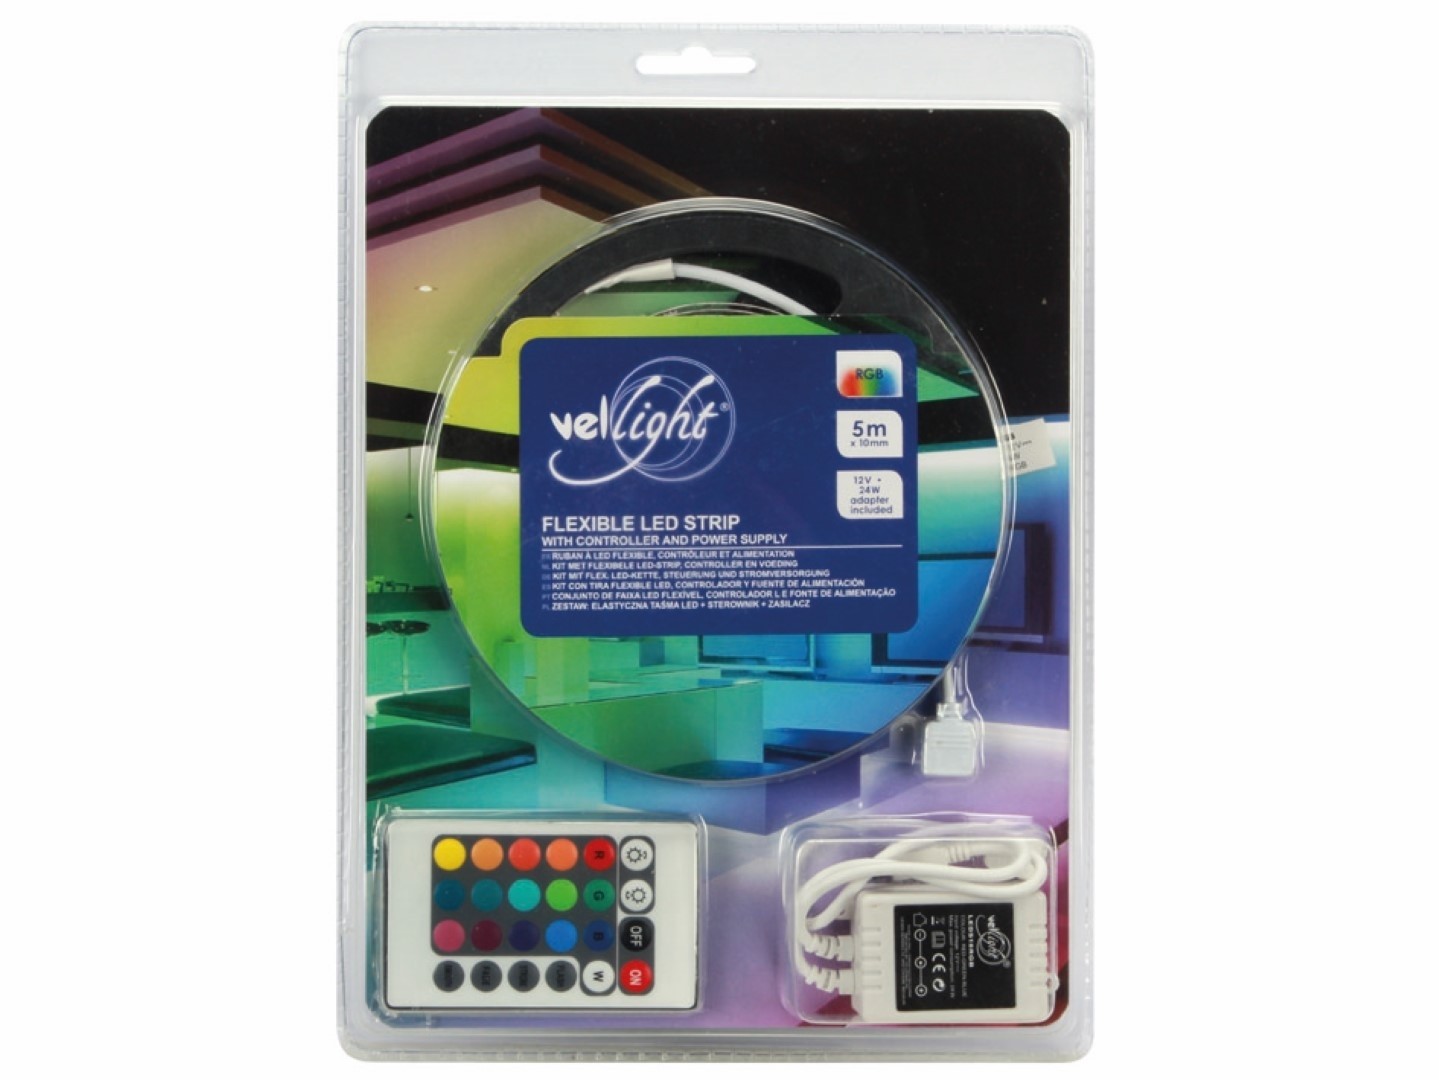 Kit met flexibele LED-strip, controller en voeding - RGB - 150 LEDs - 5 m - 12 vdc - zonder coating